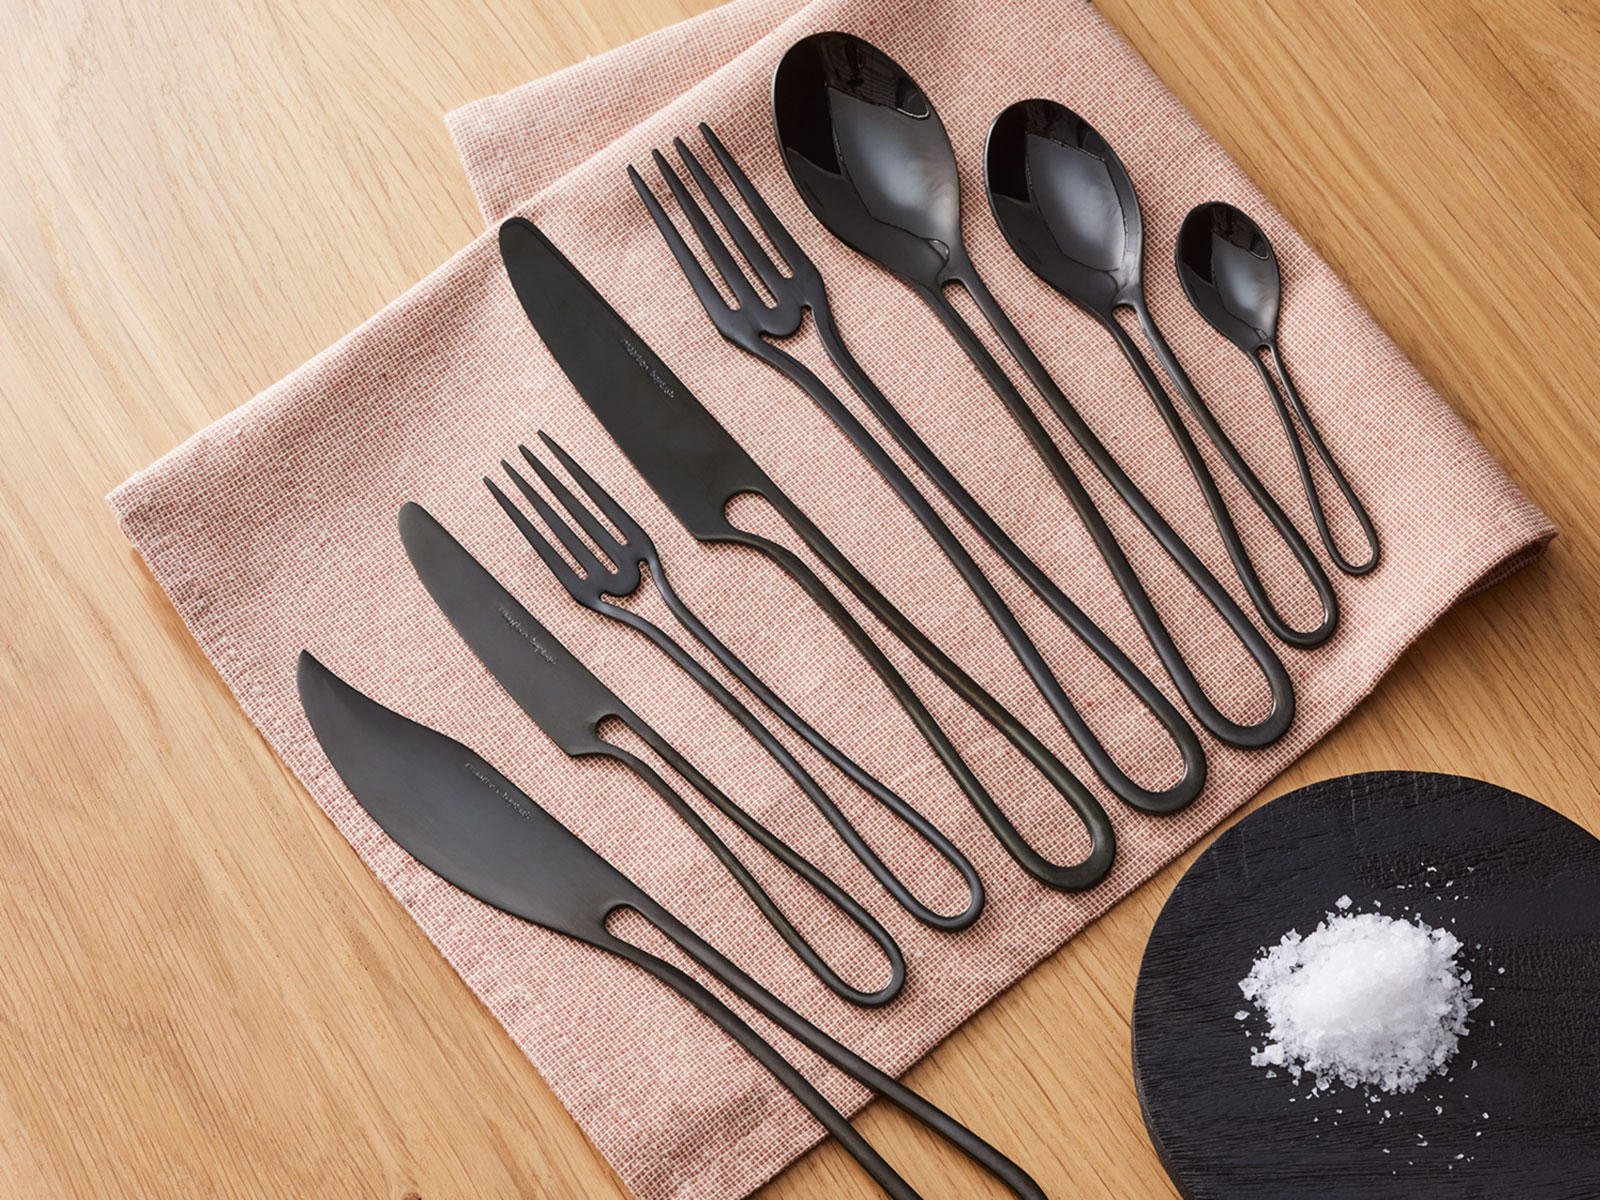 Outline cutlery black pieces